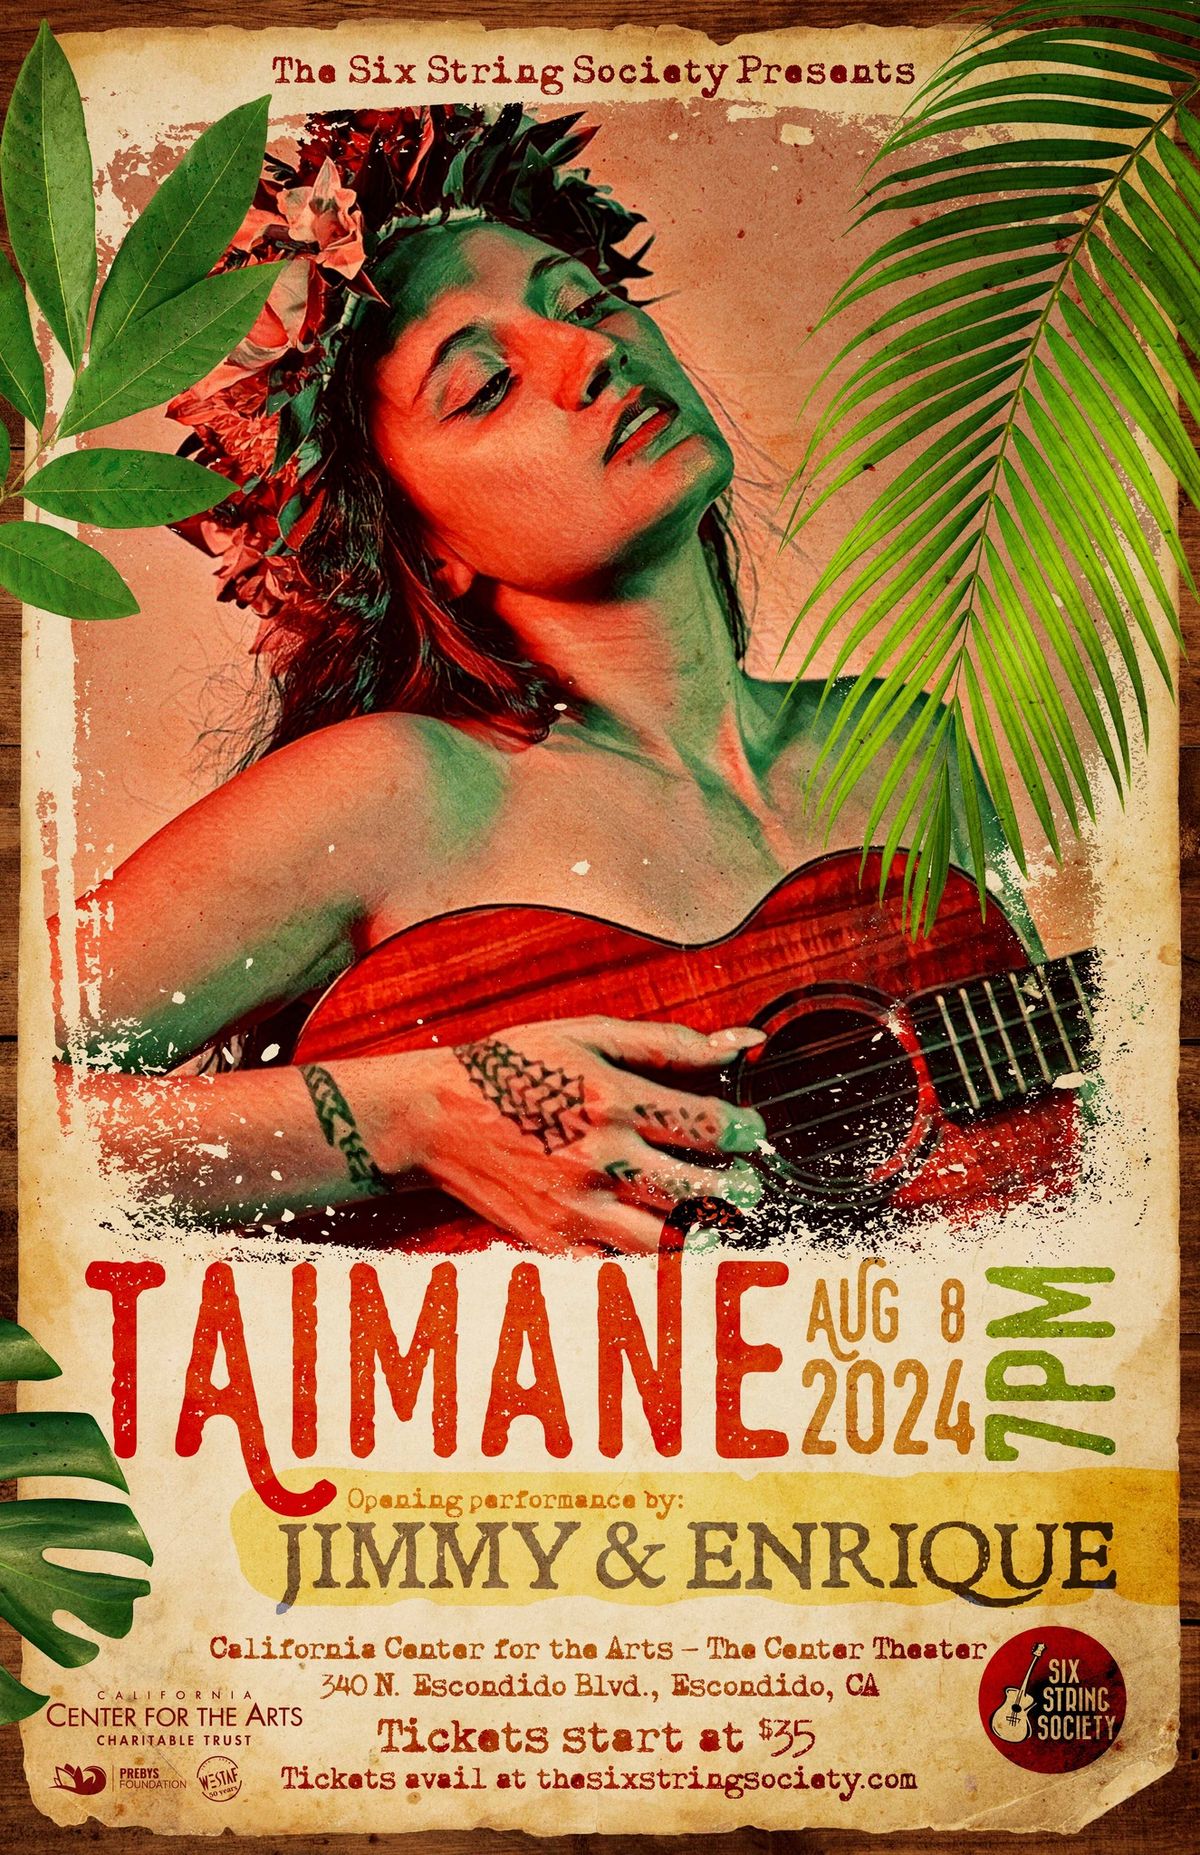 Taimane at the Center Theater-Escondido